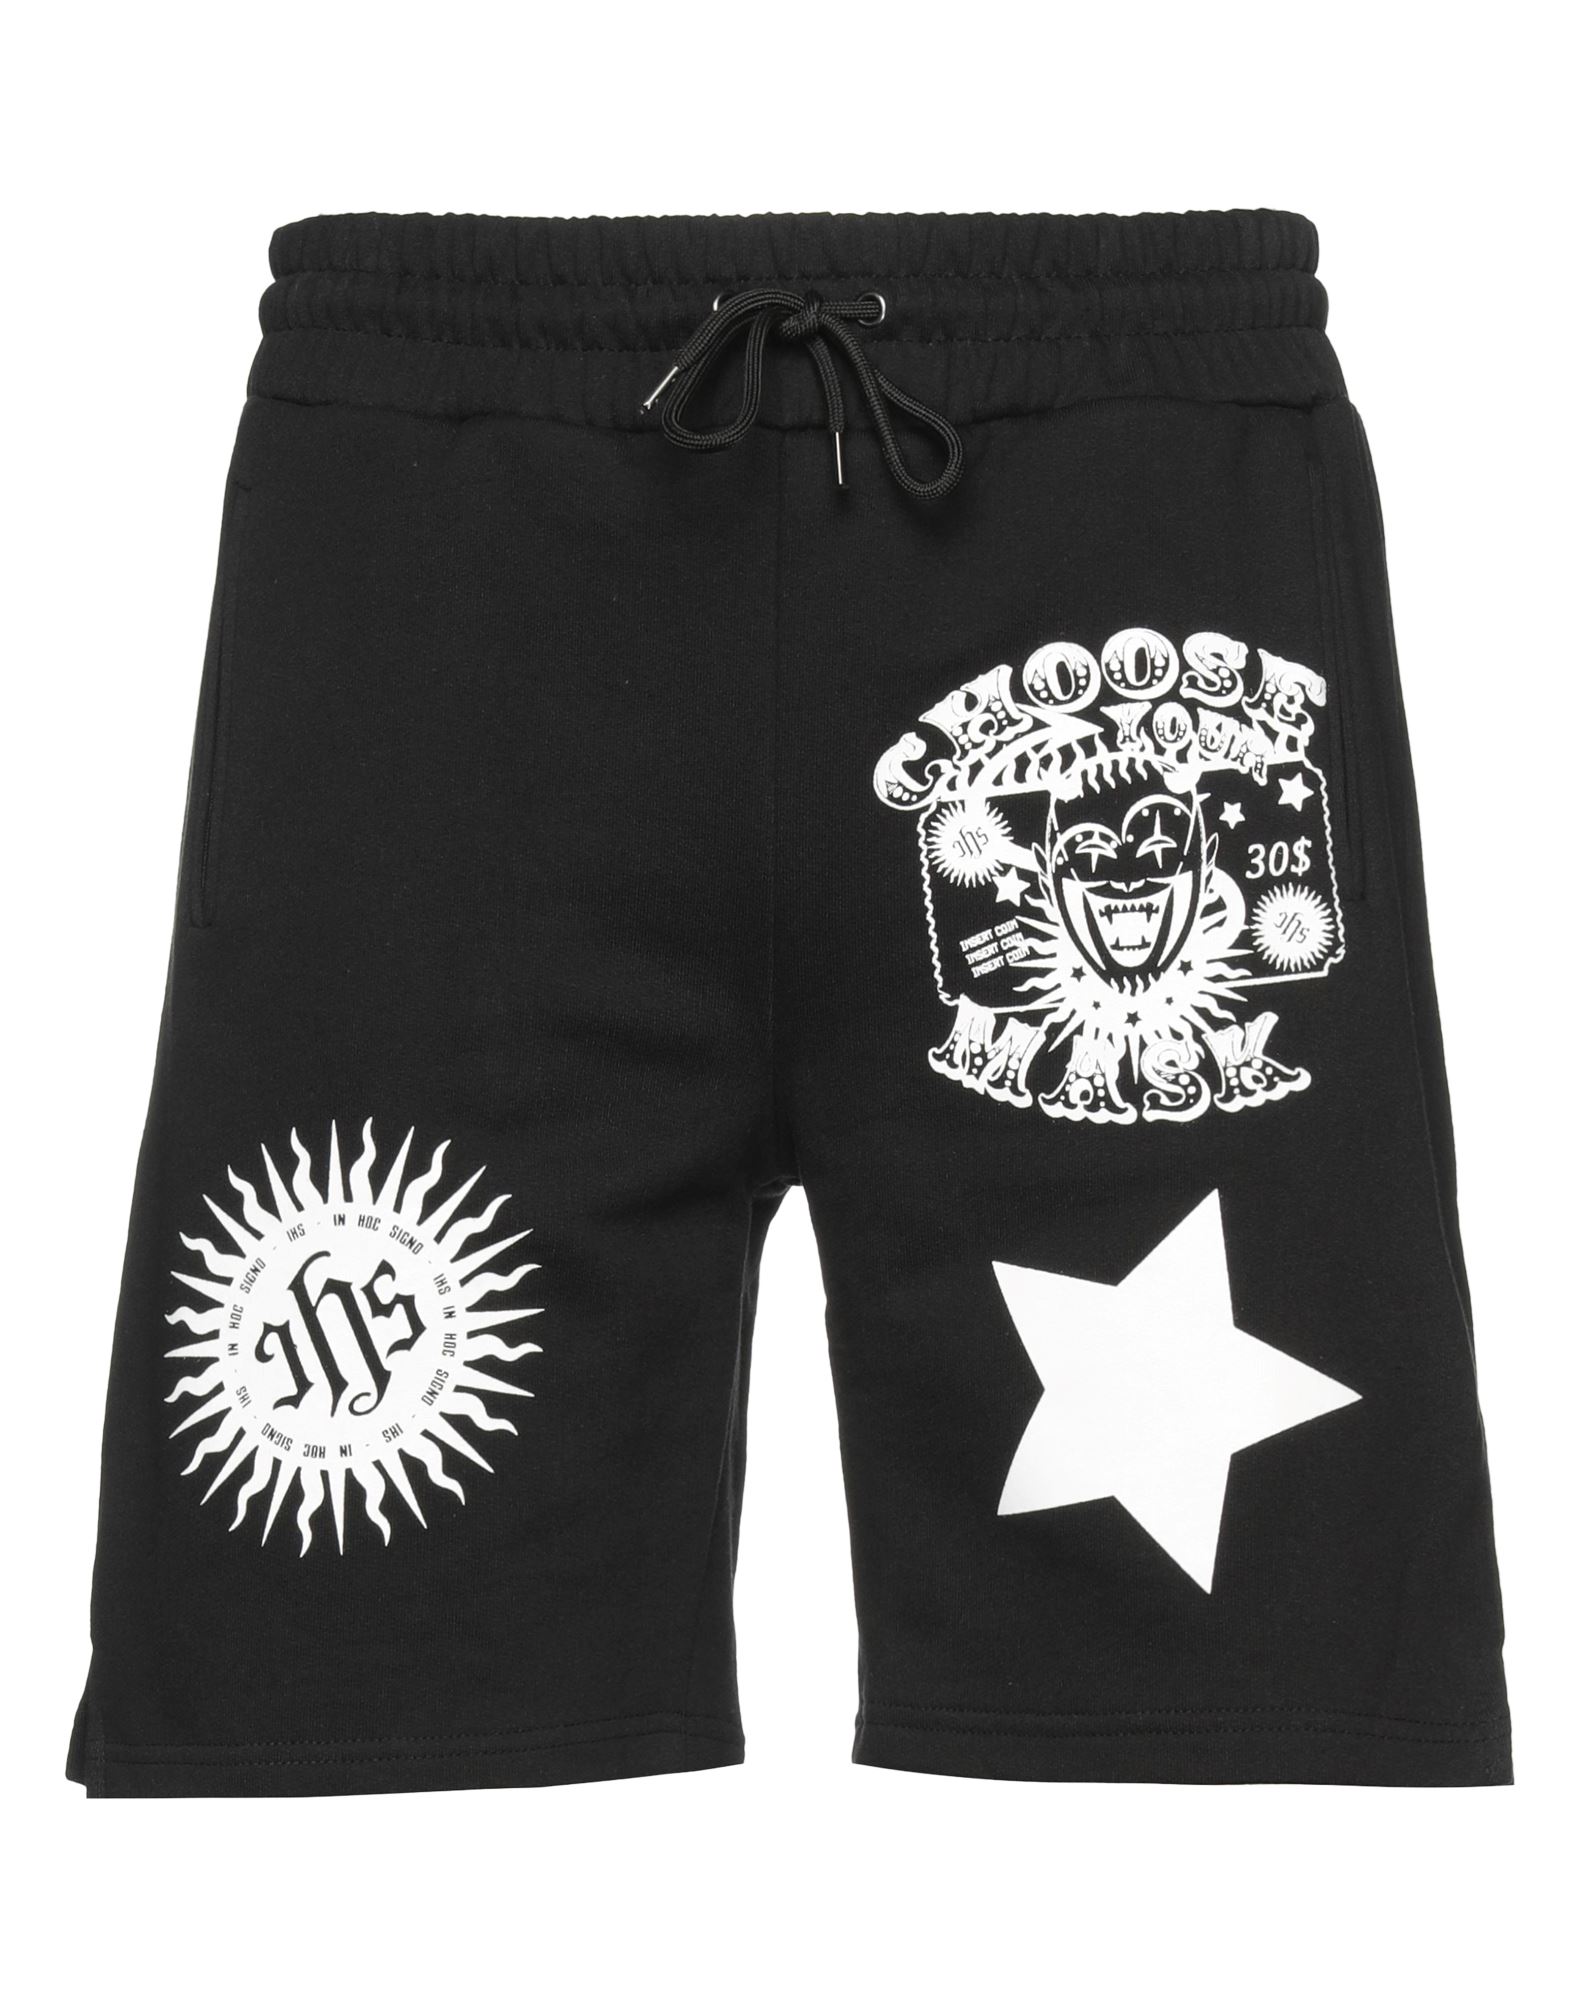 Ihs Man Shorts & Bermuda Shorts Black Size Xxl Cotton